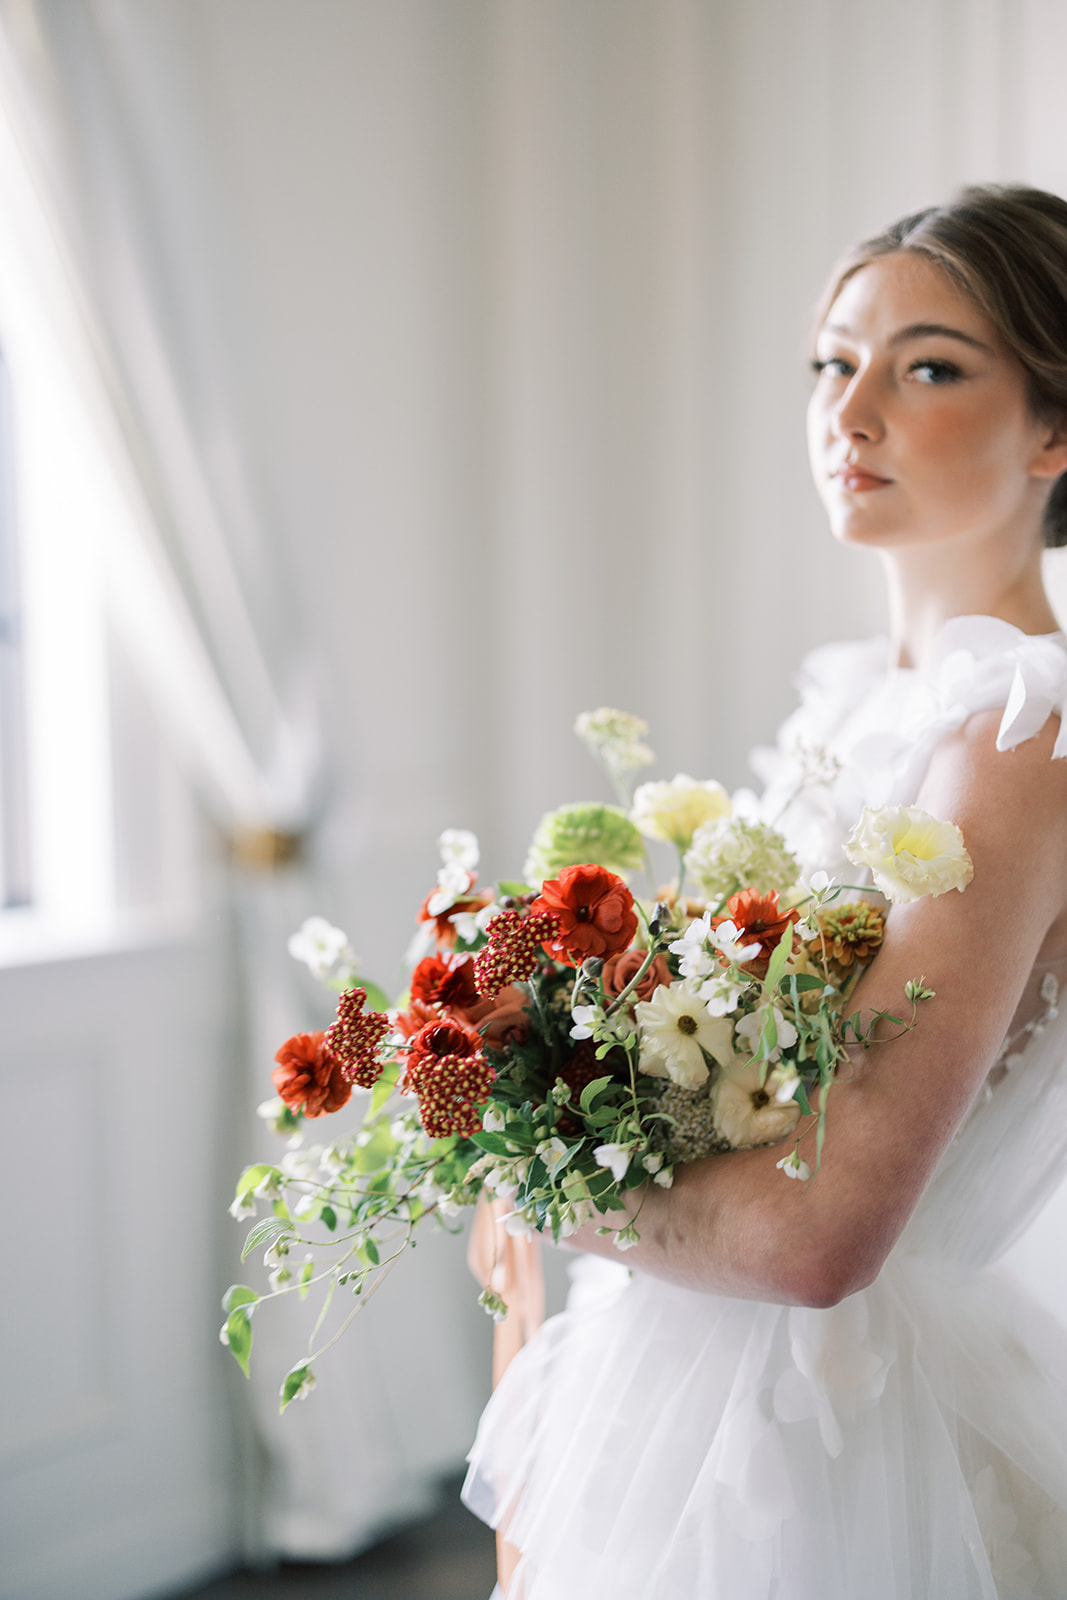 Wedding bouquet inspiration